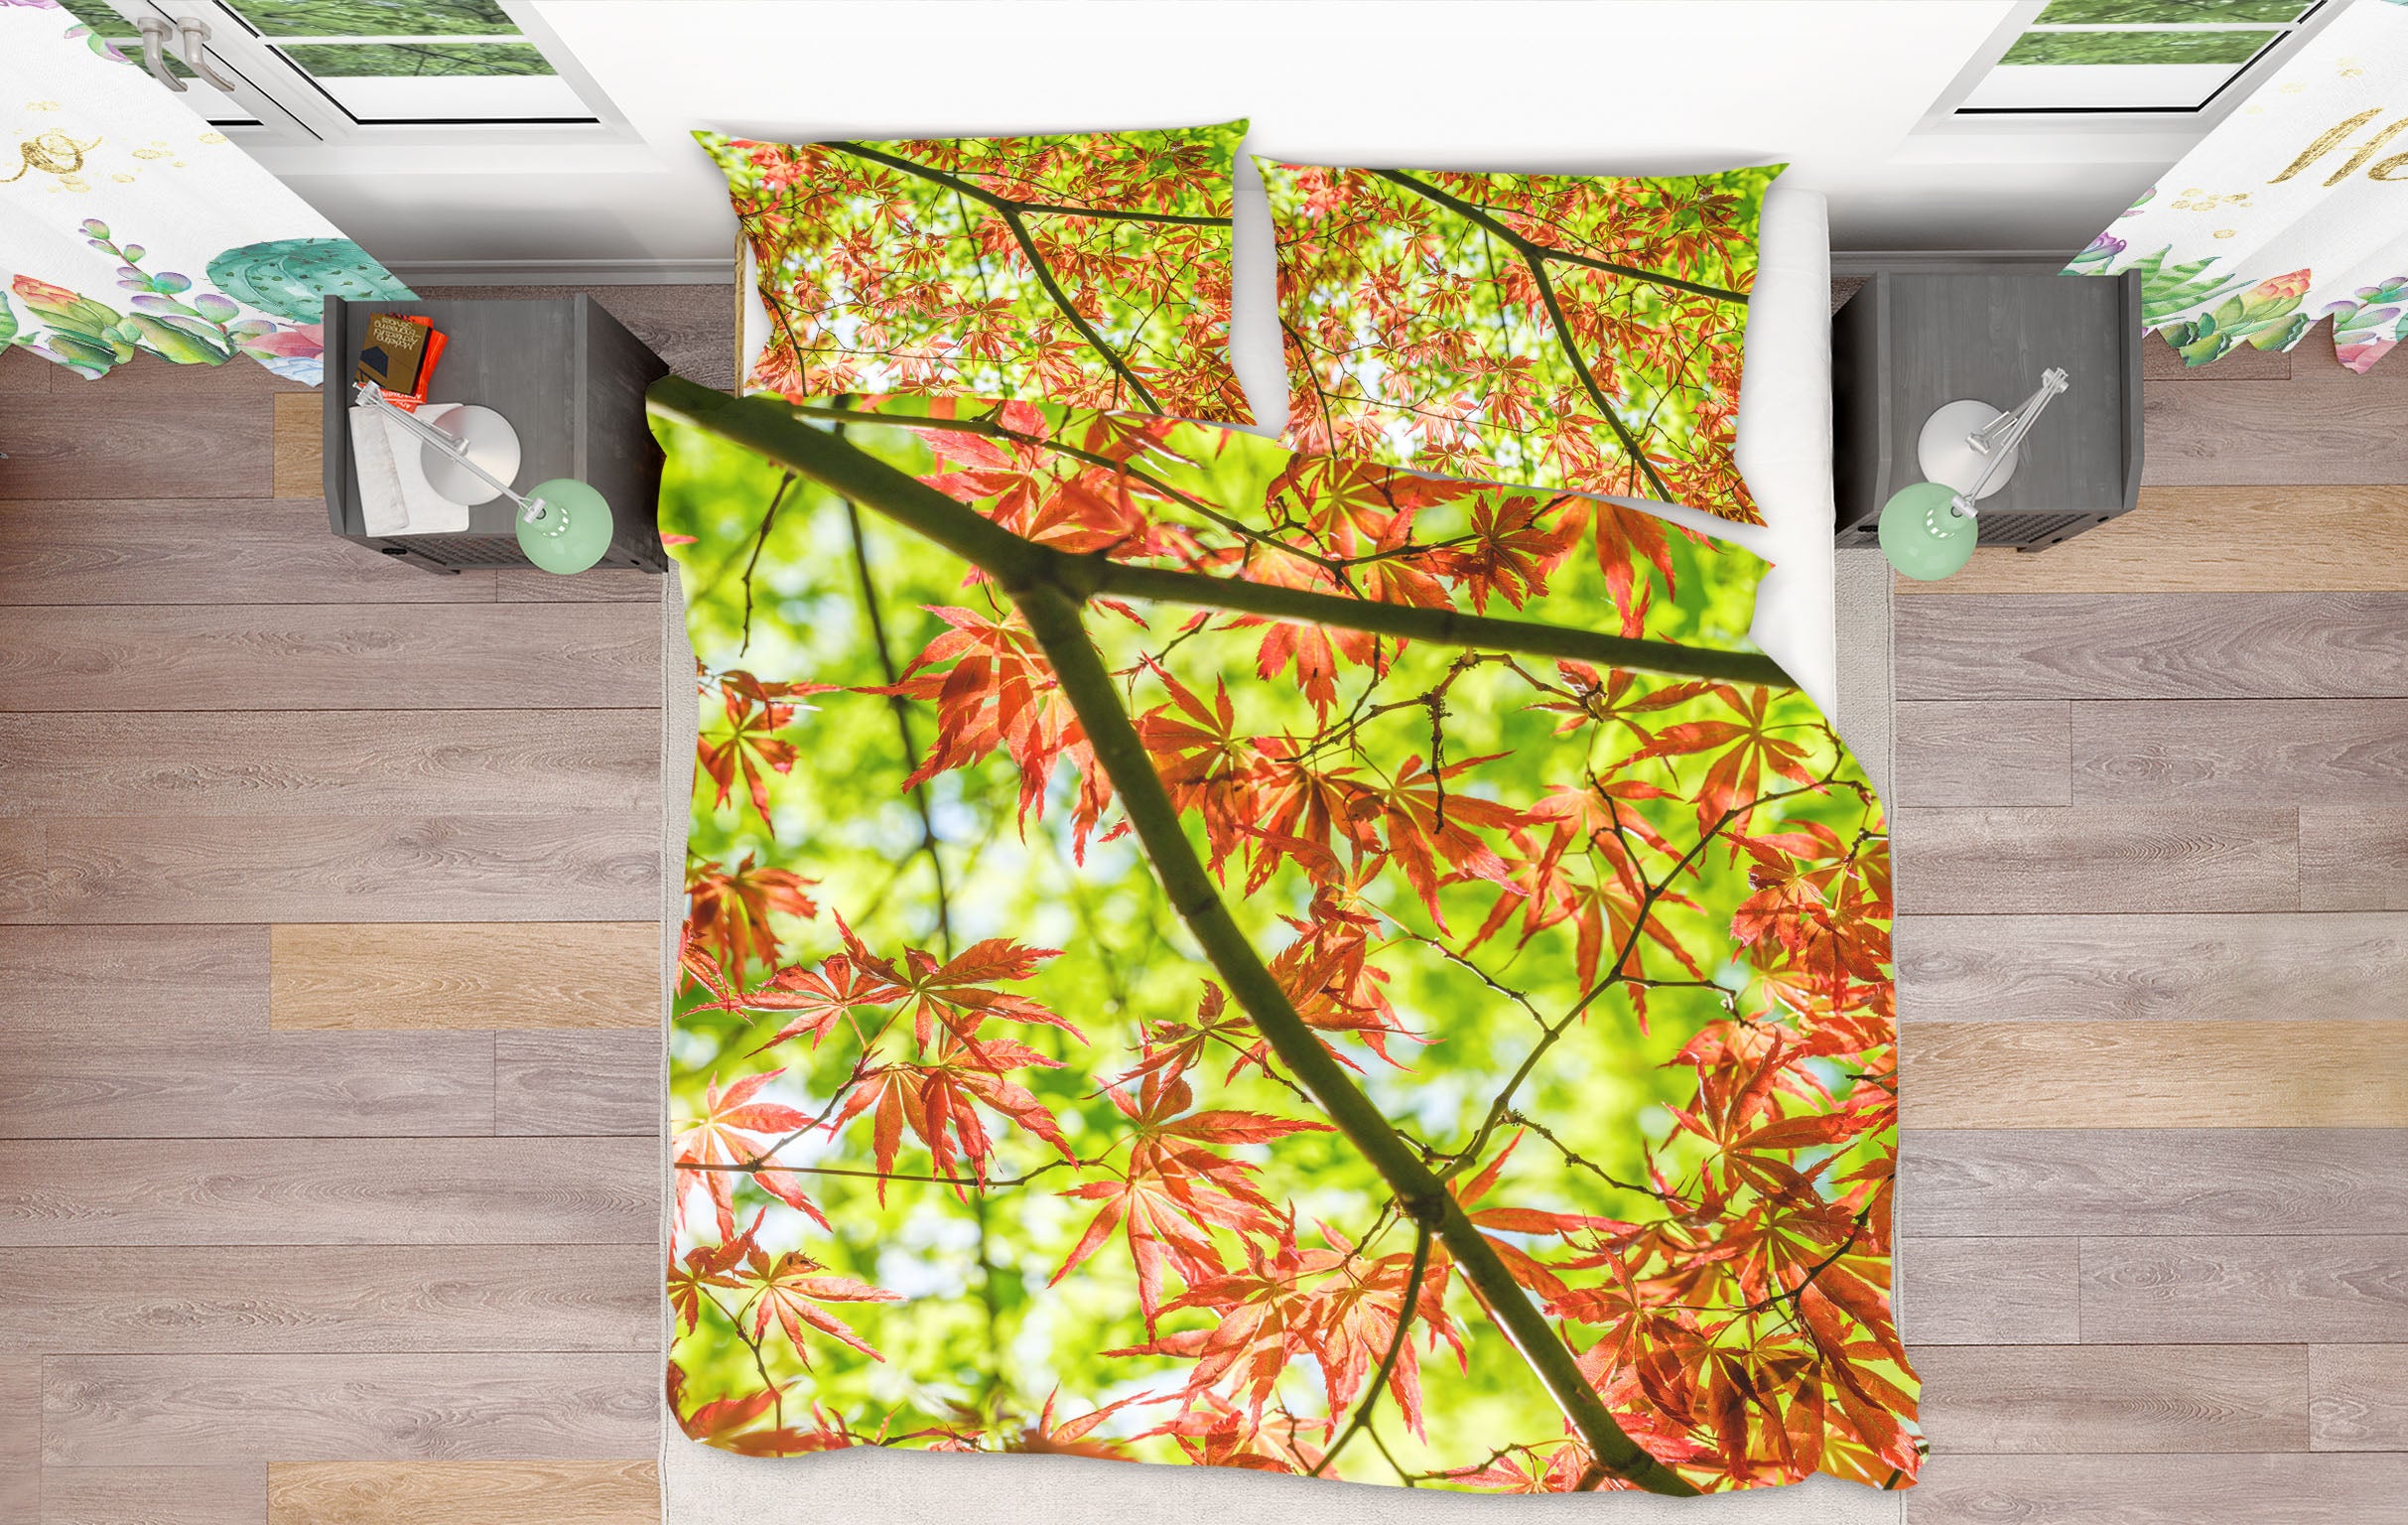 3D Red Maple Leaf 7190 Assaf Frank Bedding Bed Pillowcases Quilt Cover Duvet Cover